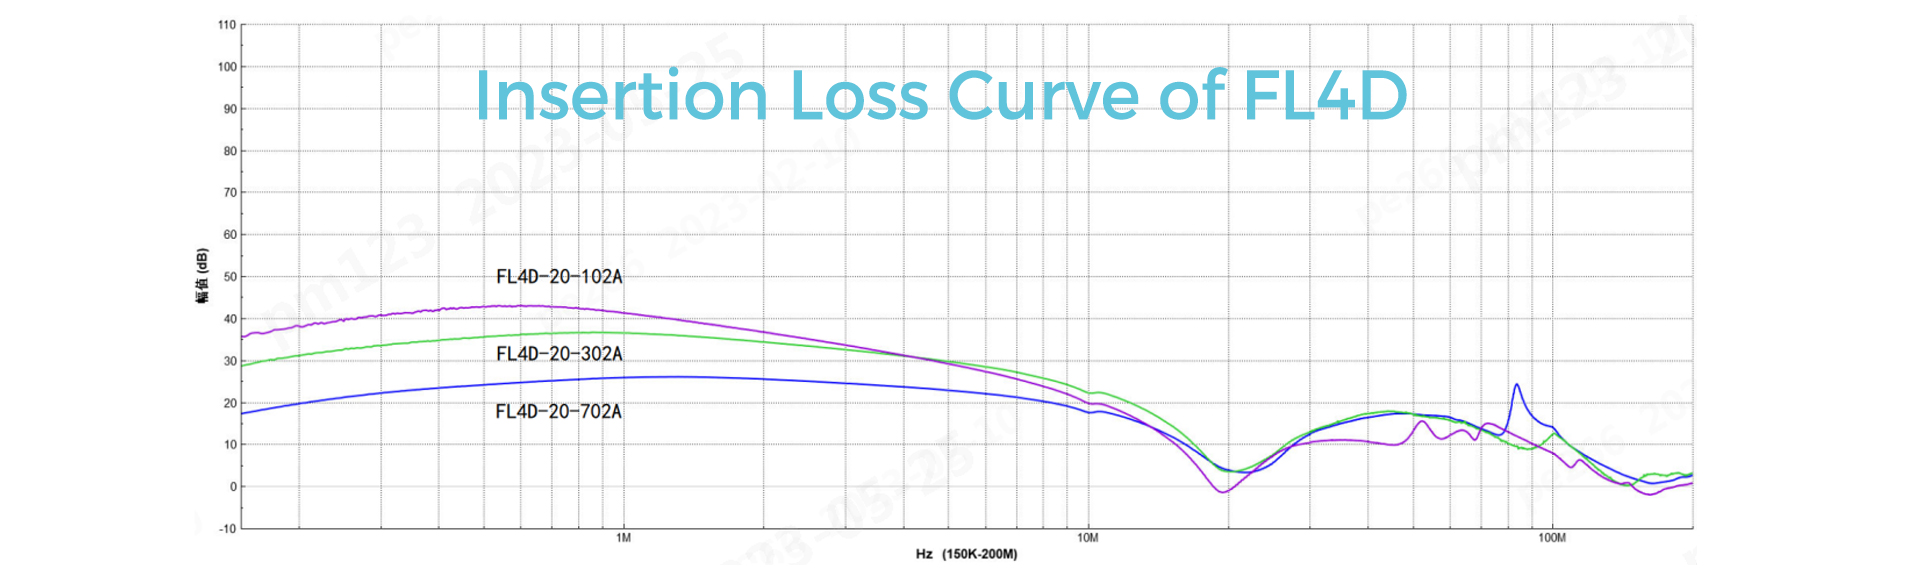 Insertion Loss Curve of FL4D.jpg